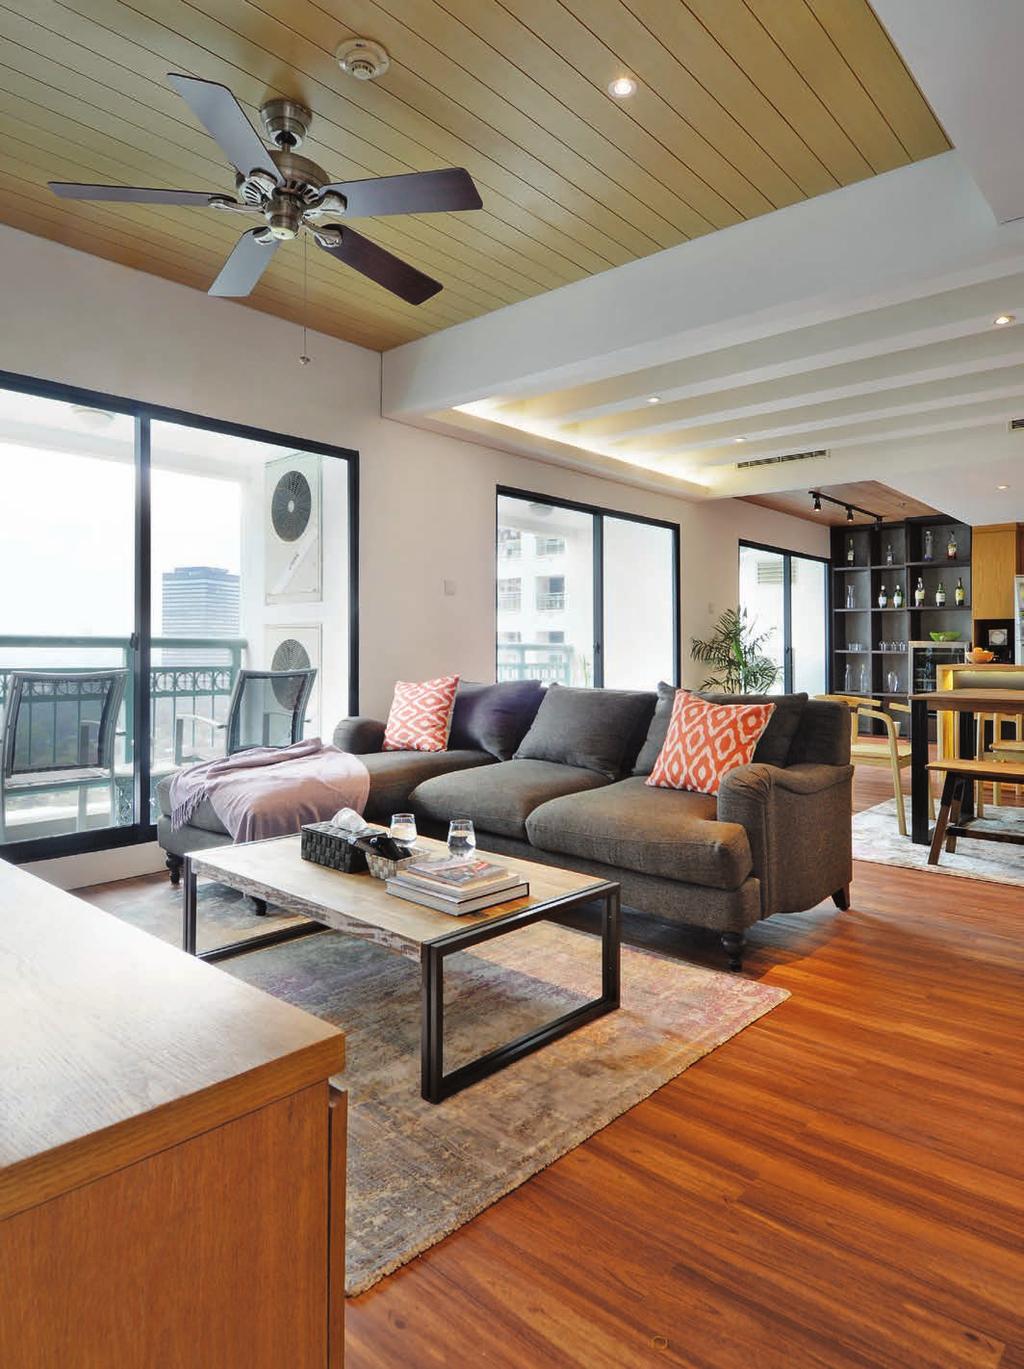 Untuk plafon area makan dan ruang duduk, dipilih material kayu yang hangat, agar ruang lebih nyaman untuk melakukan kegiatan yang akrab.